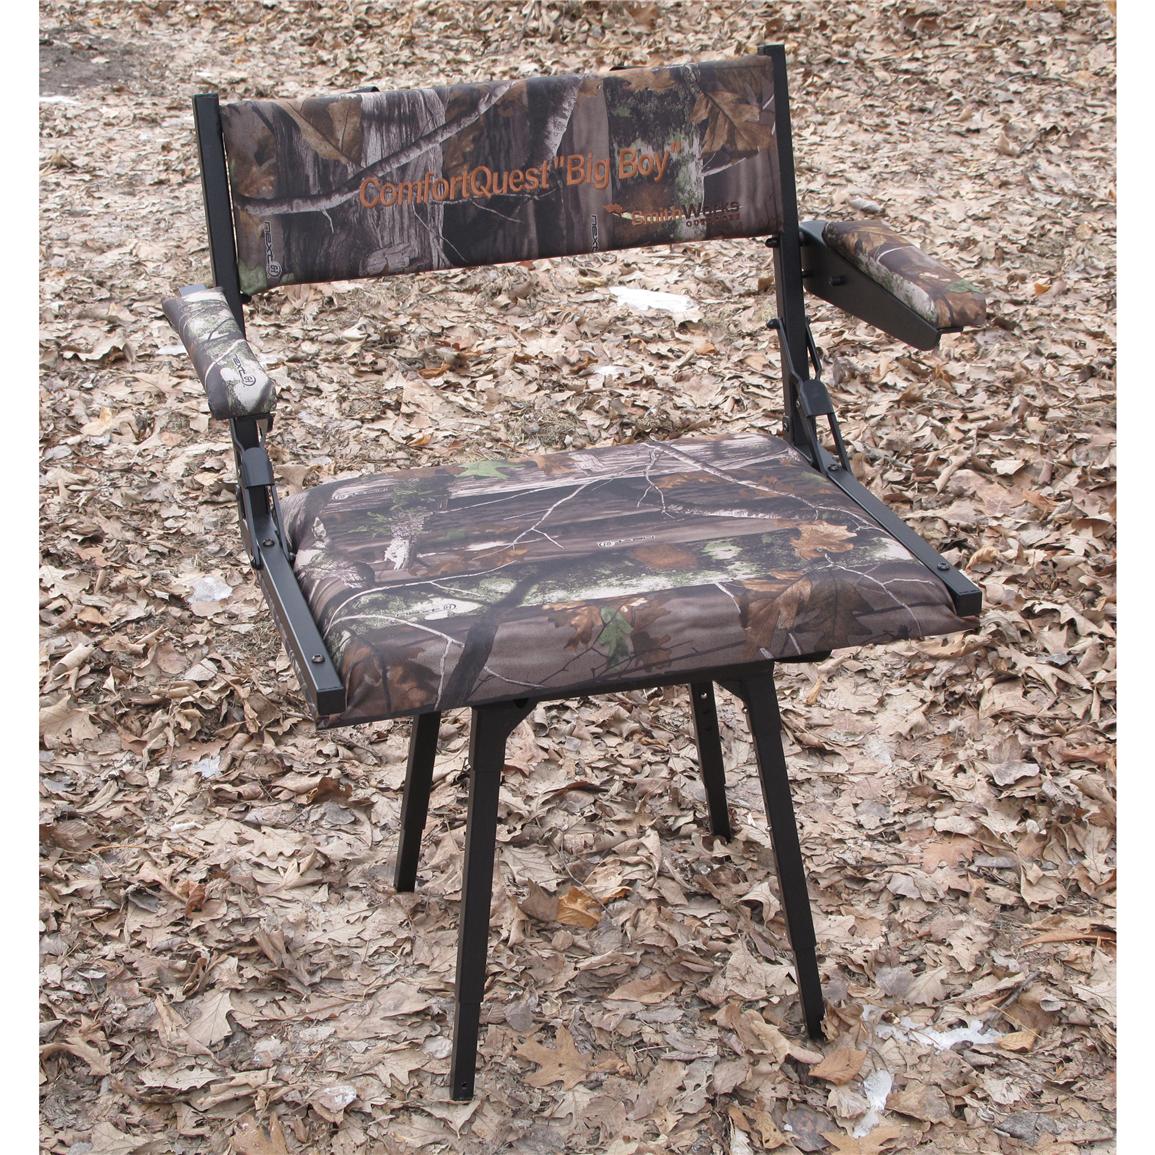 SmithWorks Outdoors ComfortQuest Big Boy Sport Chair